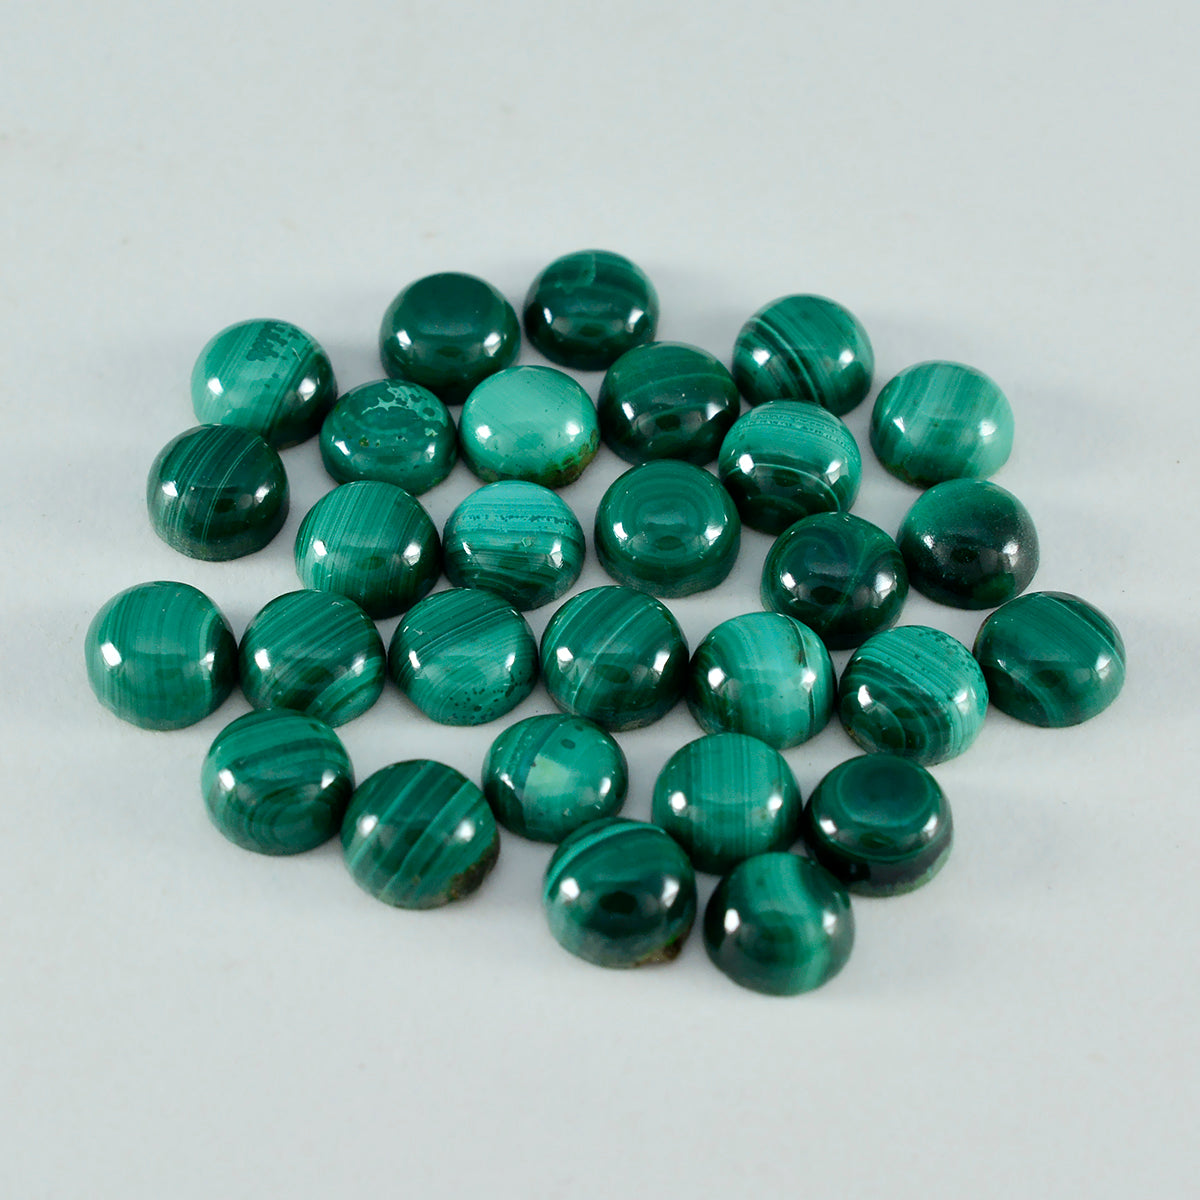 riyogems 1pc グリーン マラカイト カボション 6x6 mm ラウンド形状の優れた品質のルース宝石